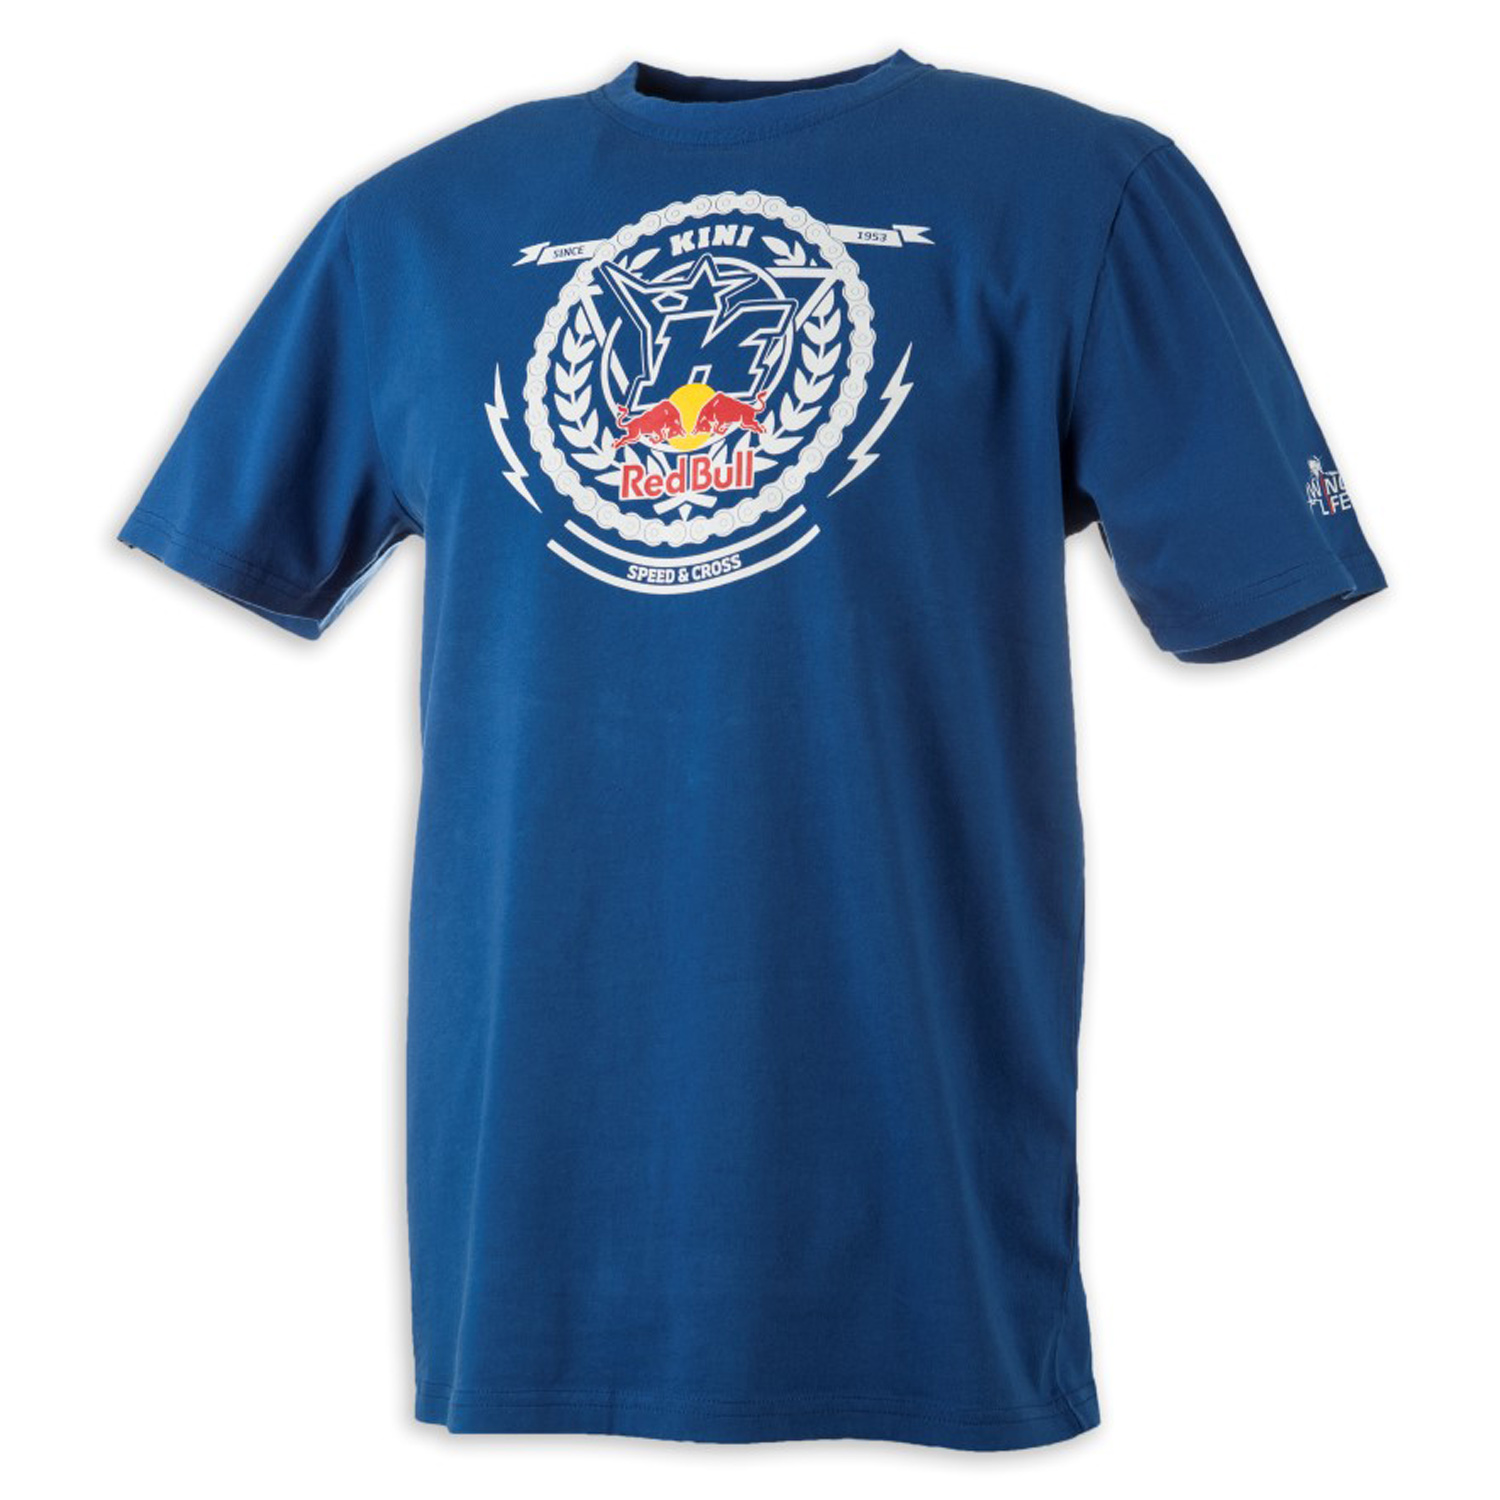 Kini Red Bull T-Shirt Crest Navy